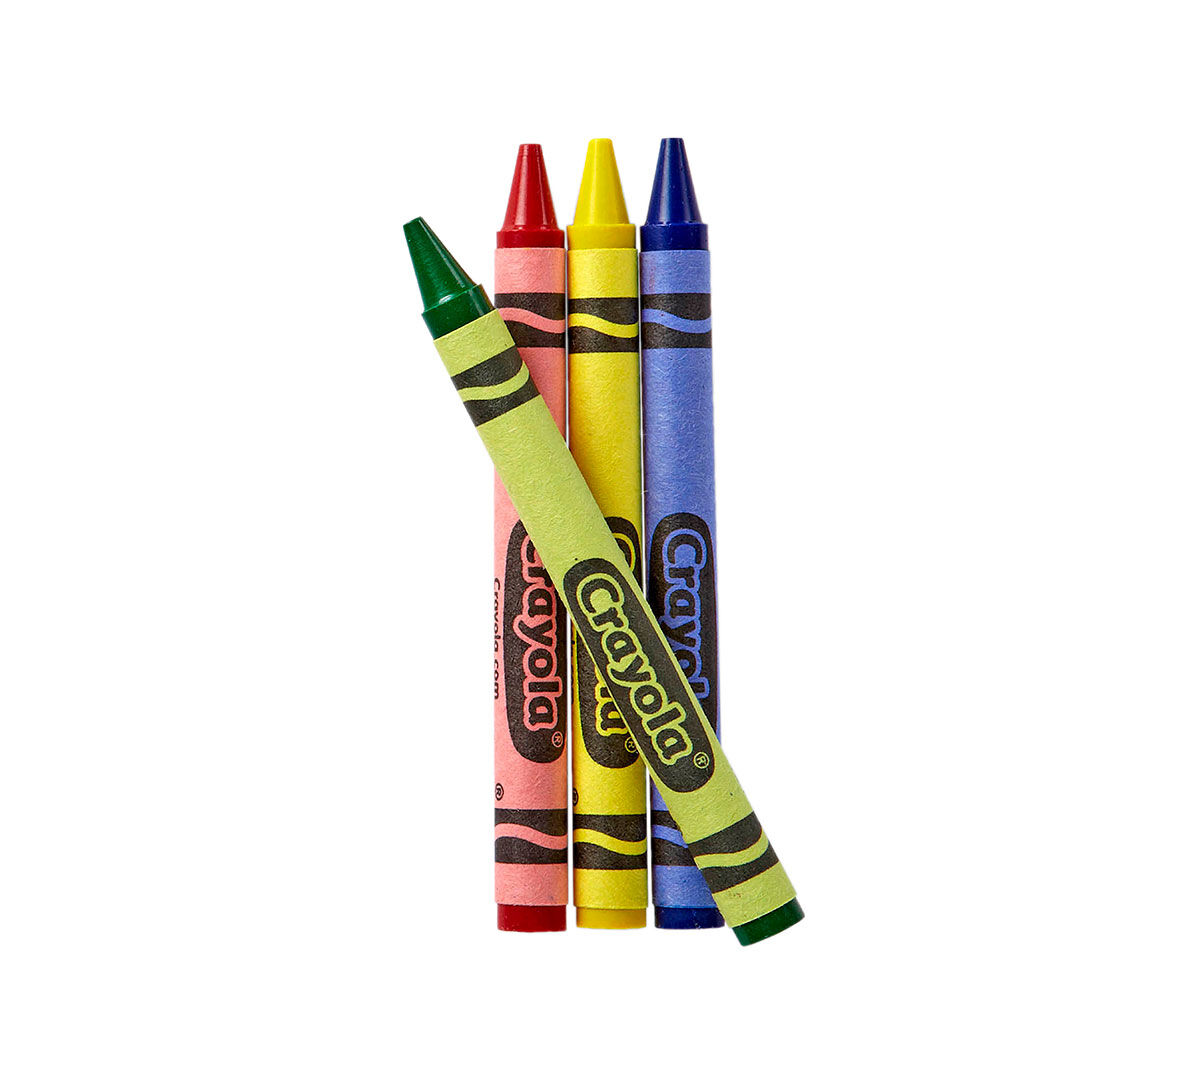 110 Crayon Party Favor 4 Packs Crayola Crayons 4 Count 